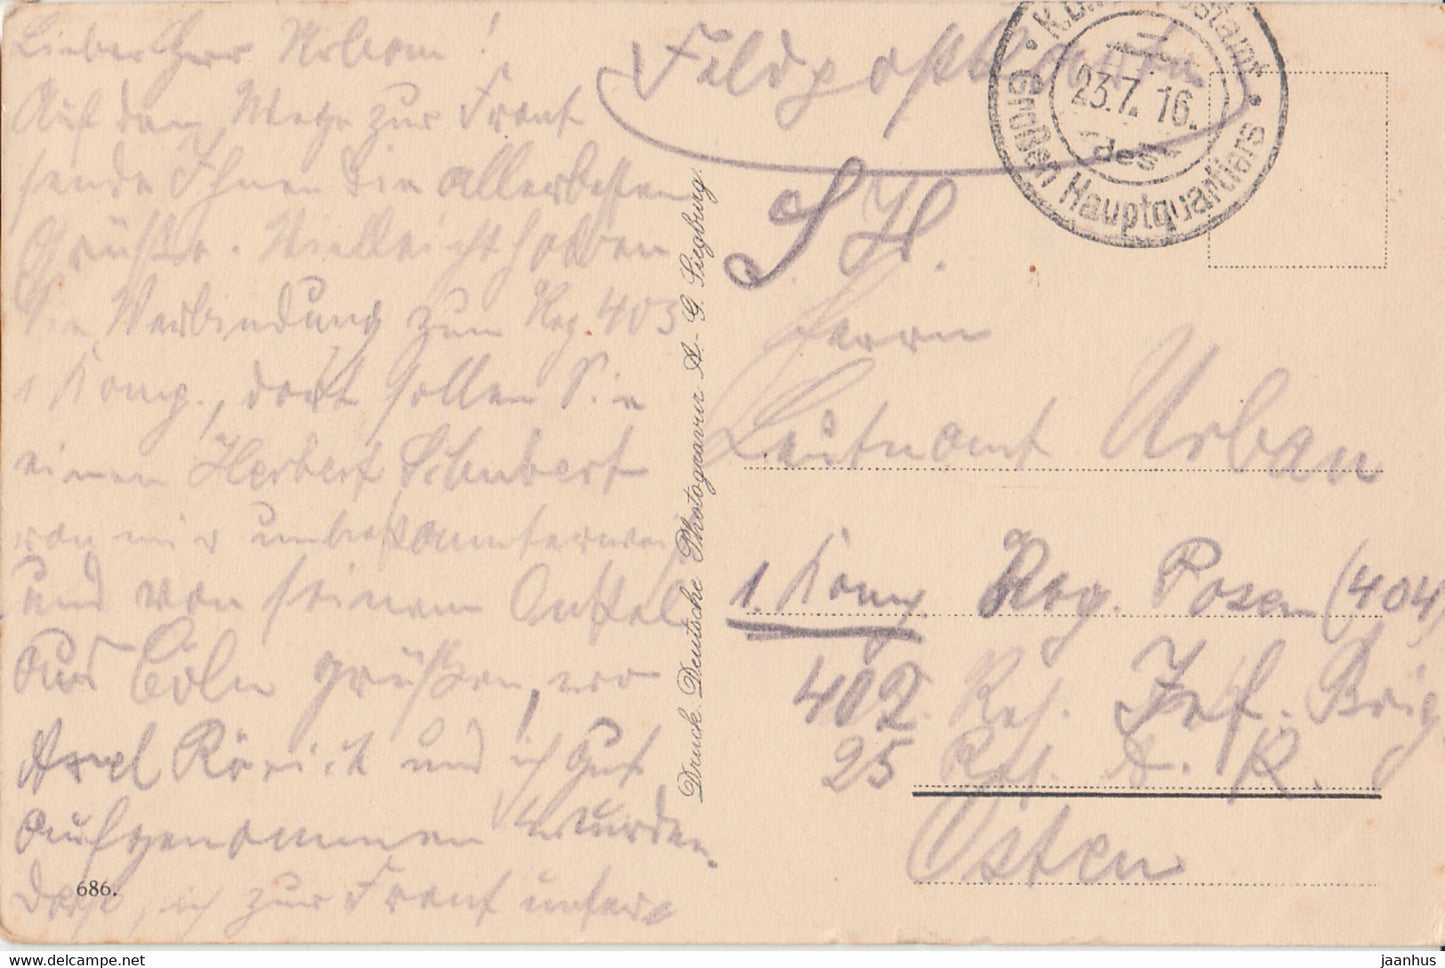 Koln a Rhein - Dom - Sudseite - Feldpost - carte postale ancienne - 1916 - Allemagne - utilisé